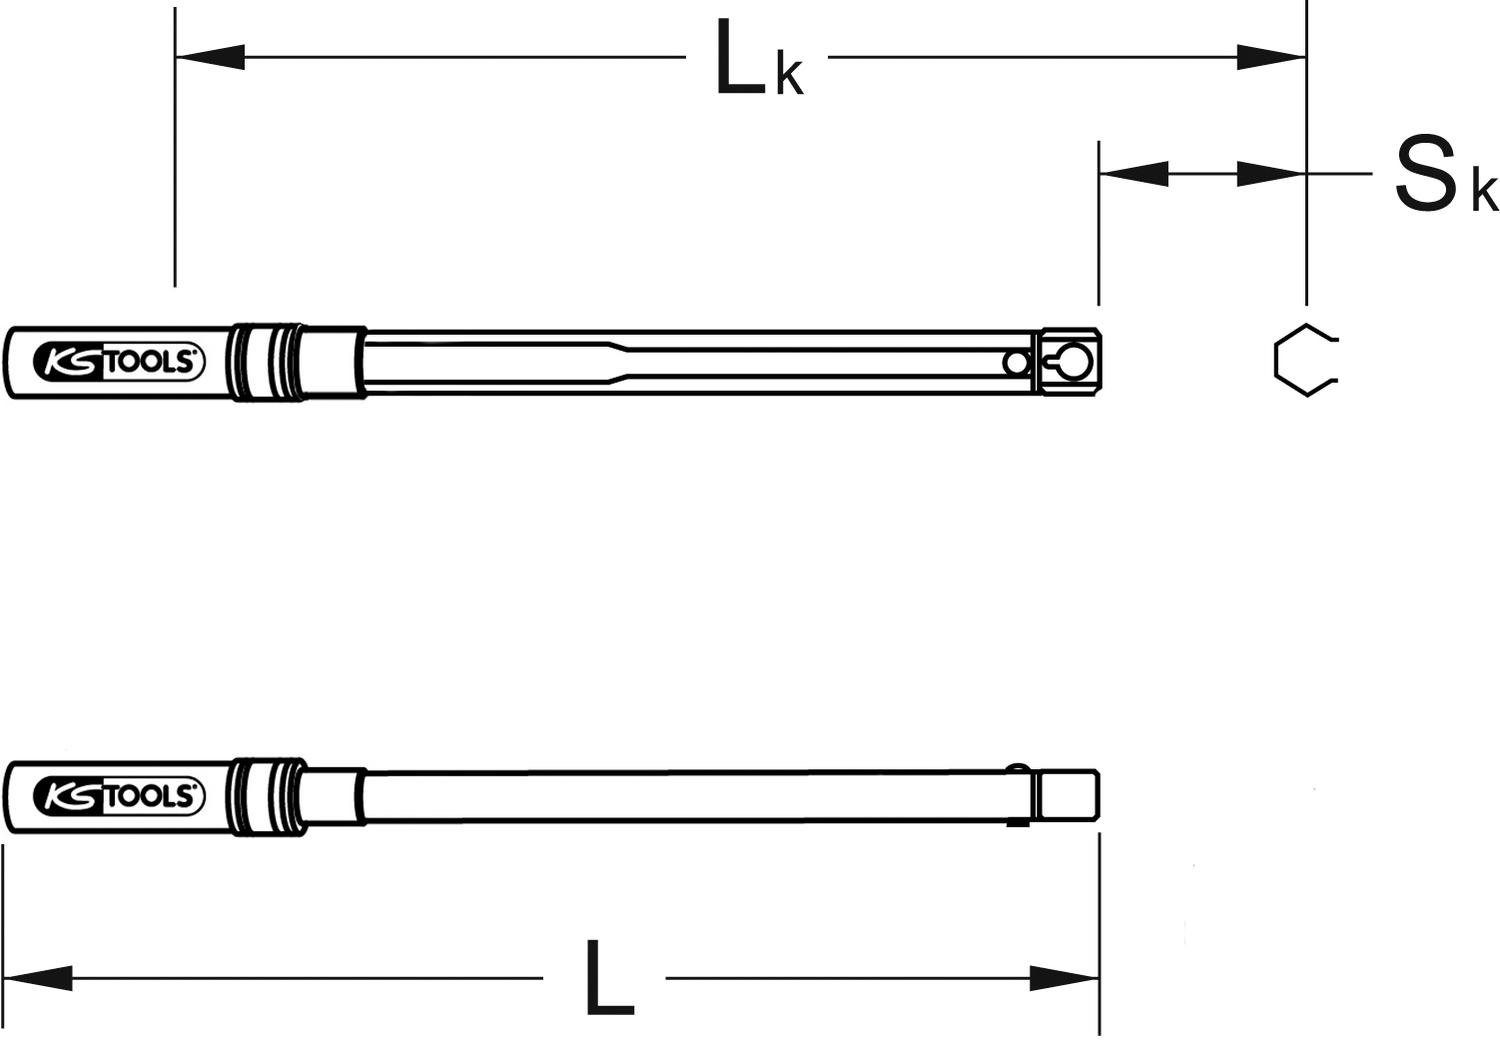 14x18mm Einsteck-Drehmomentschlüssel, Tools KS 40-200Nm Drehmomentschlüssel Industrie